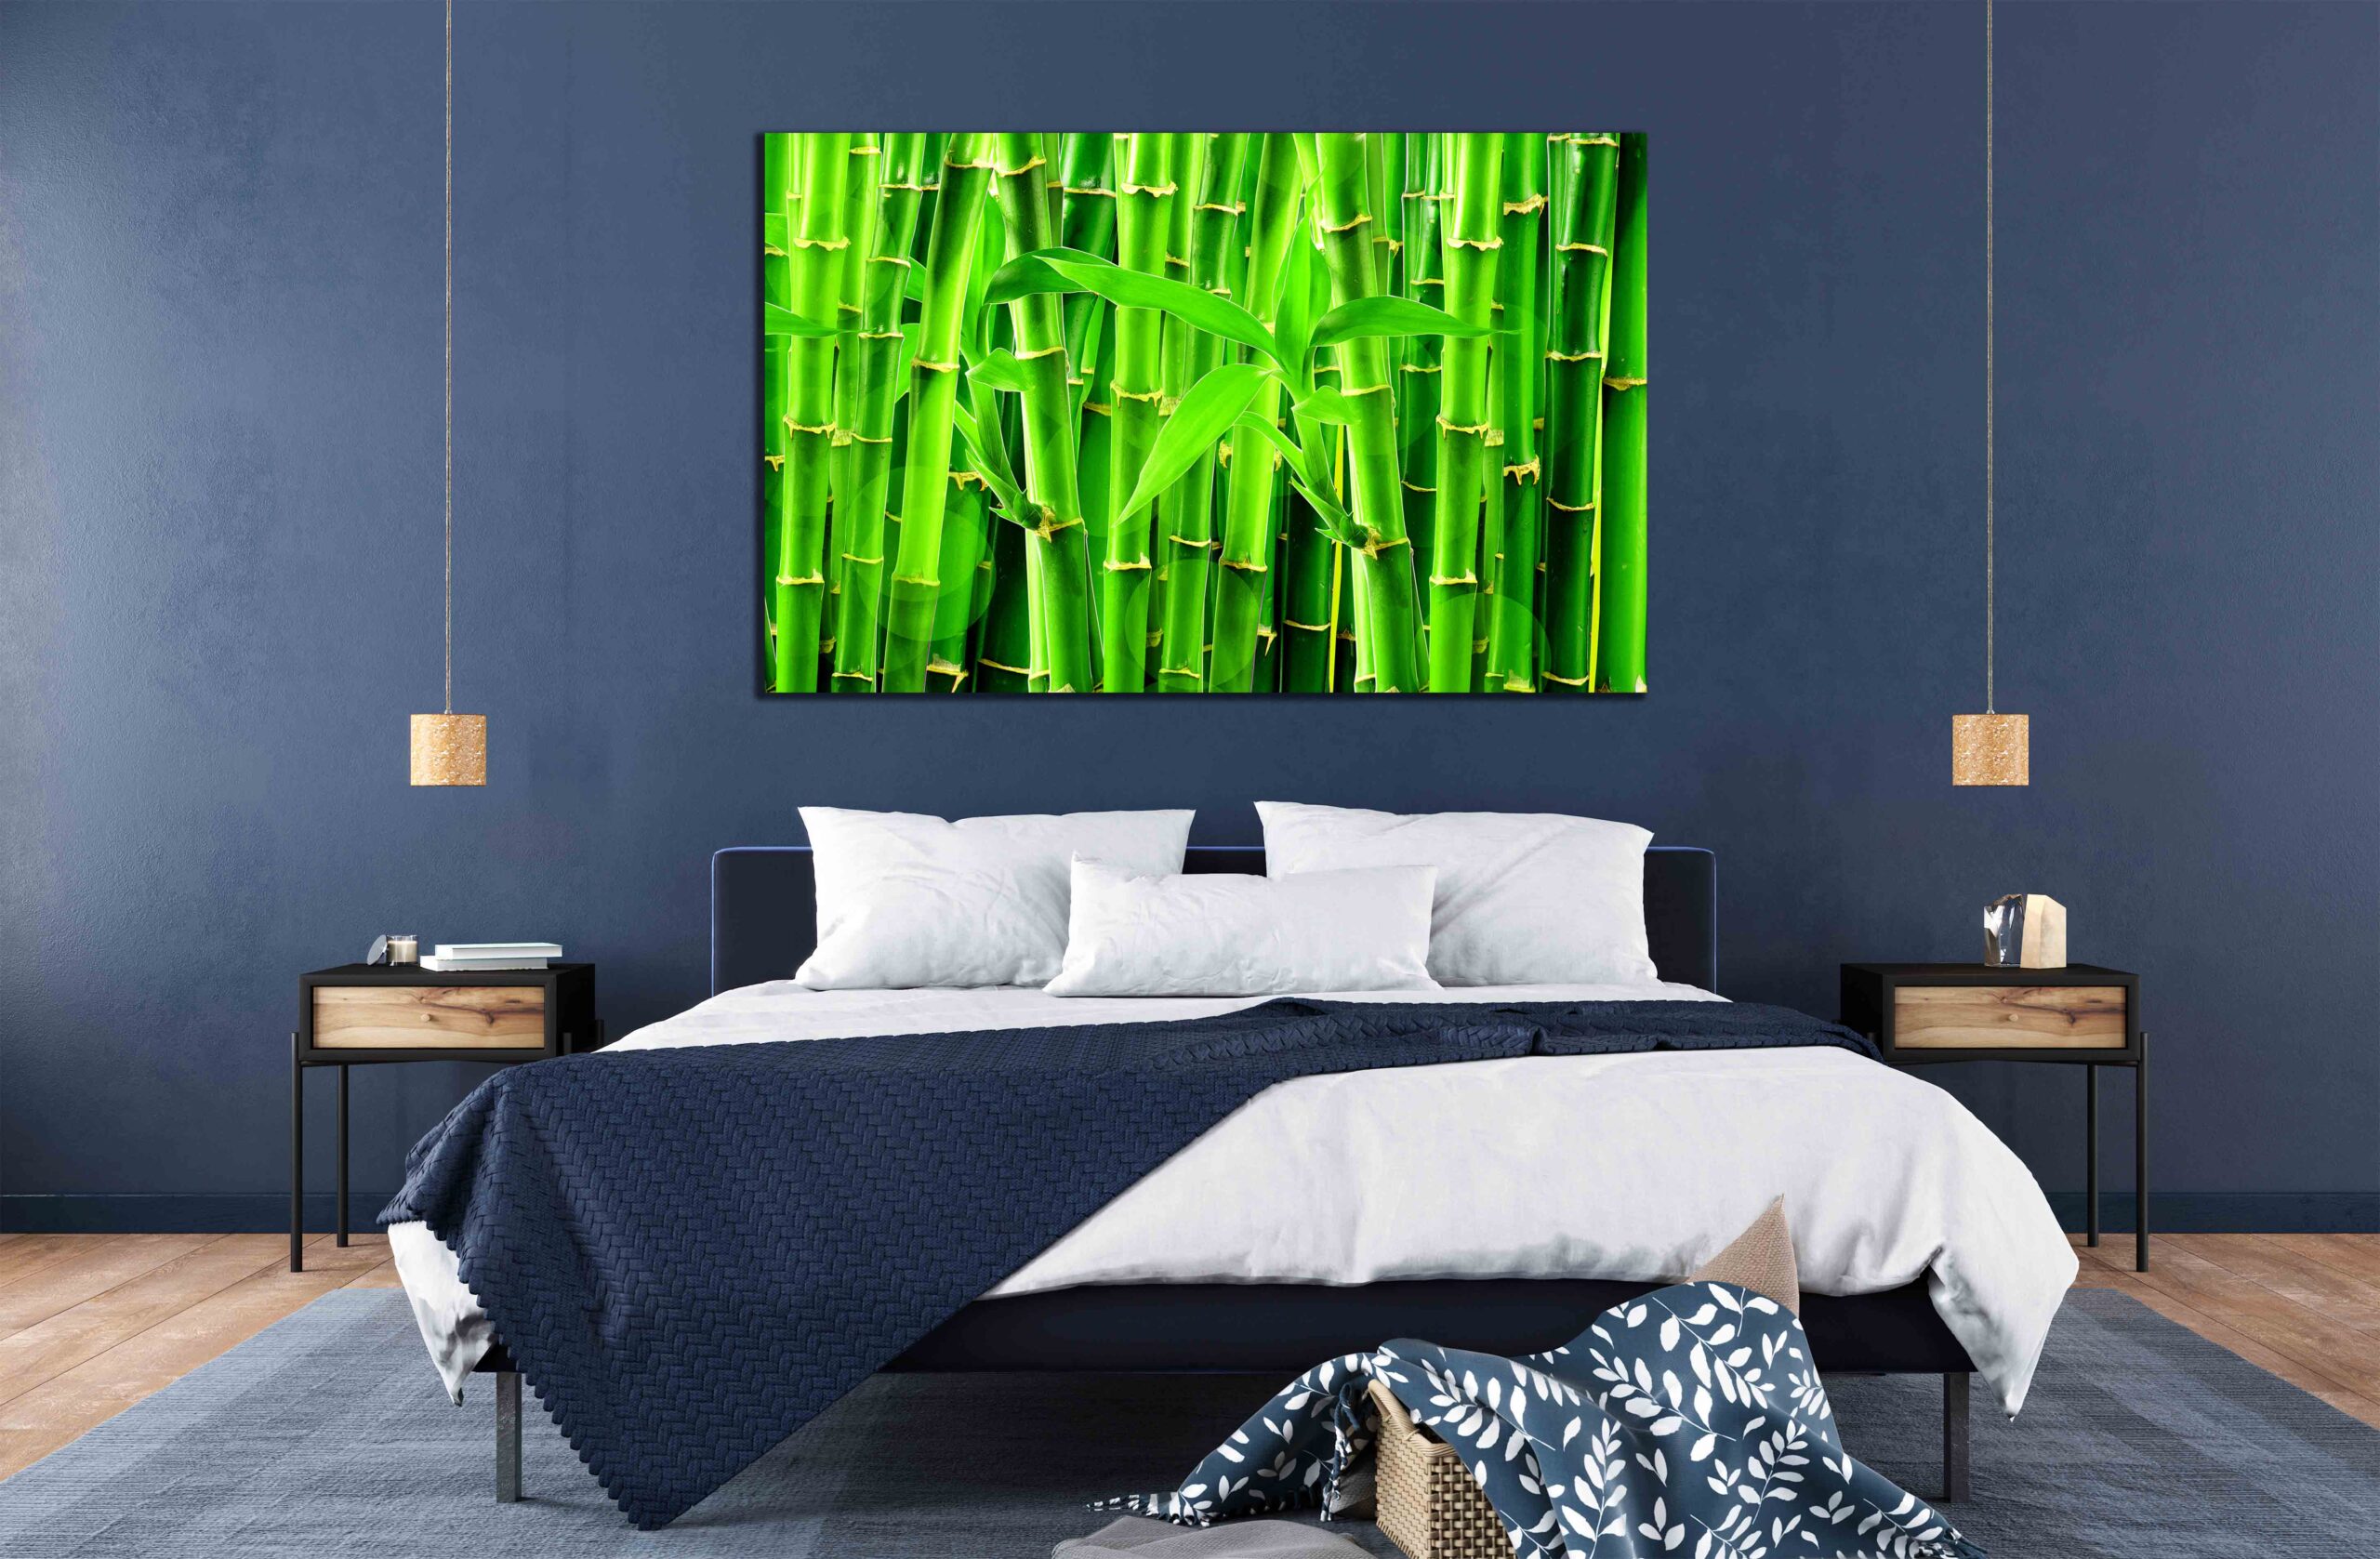 Bright green bamboo